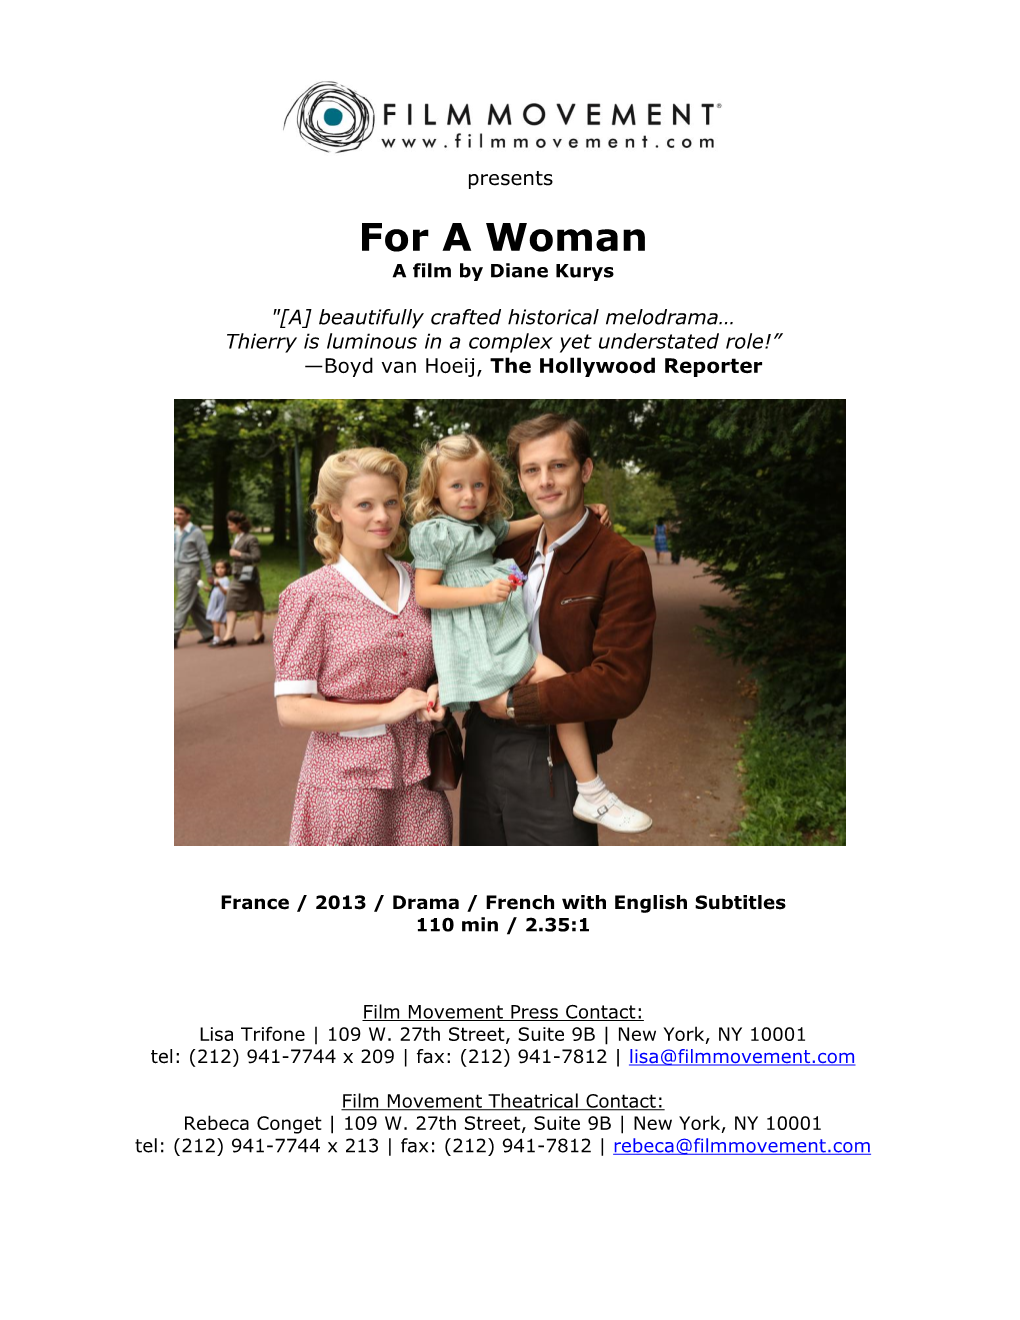 For a Woman a Film by Diane Kurys